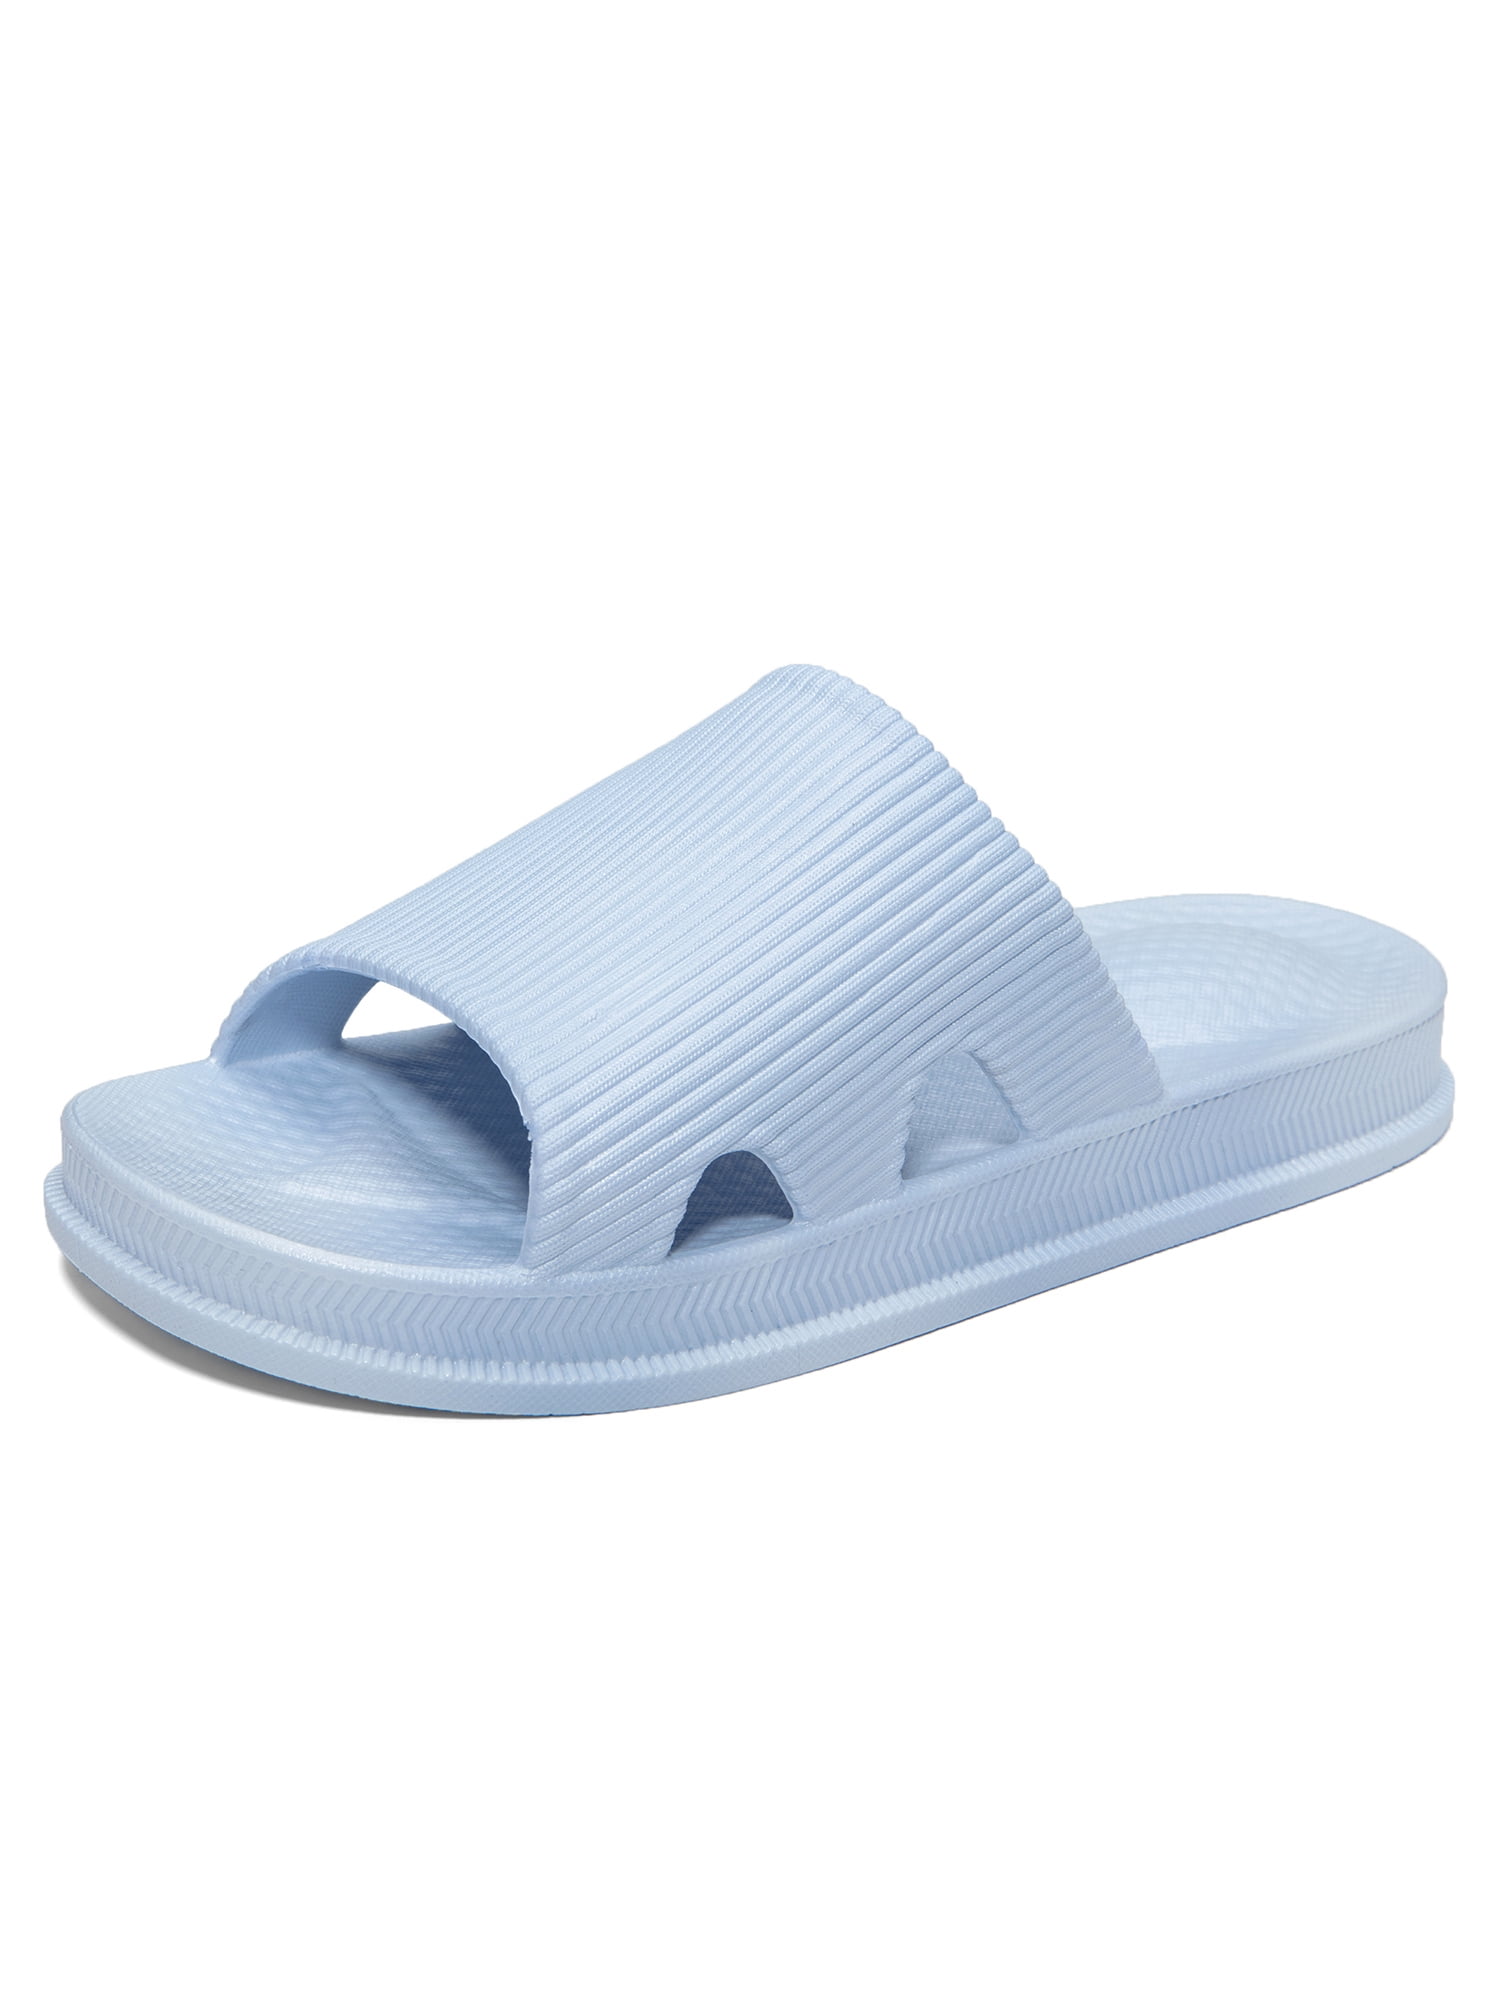 slip resistant sandals womens